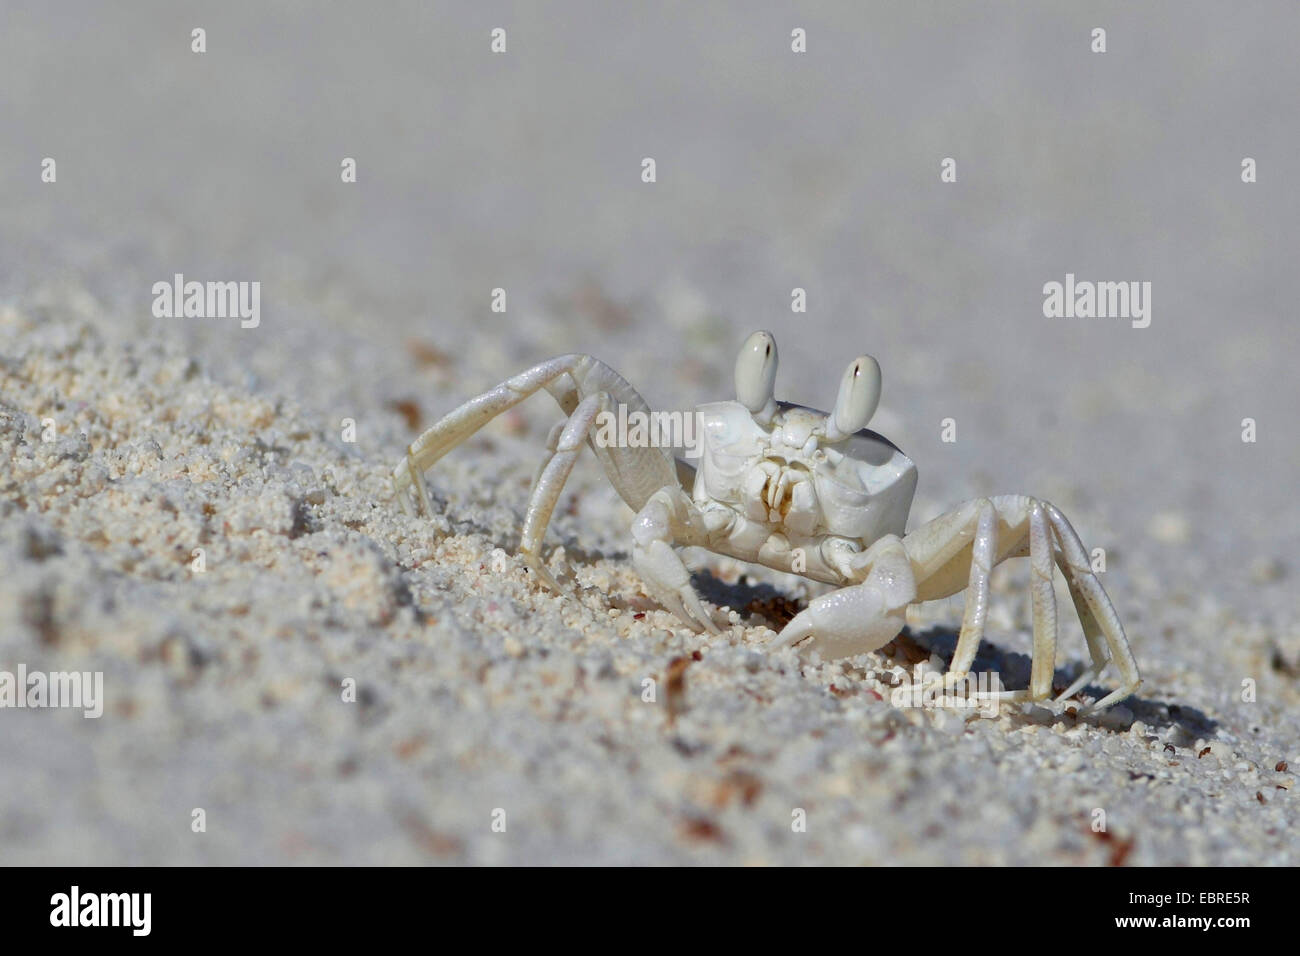 Ghost crab (Ocypode cordimana, Ocypode cordimanus), juvenile crab walking on the sandy beach, Seychelles, Bird Island Stock Photo